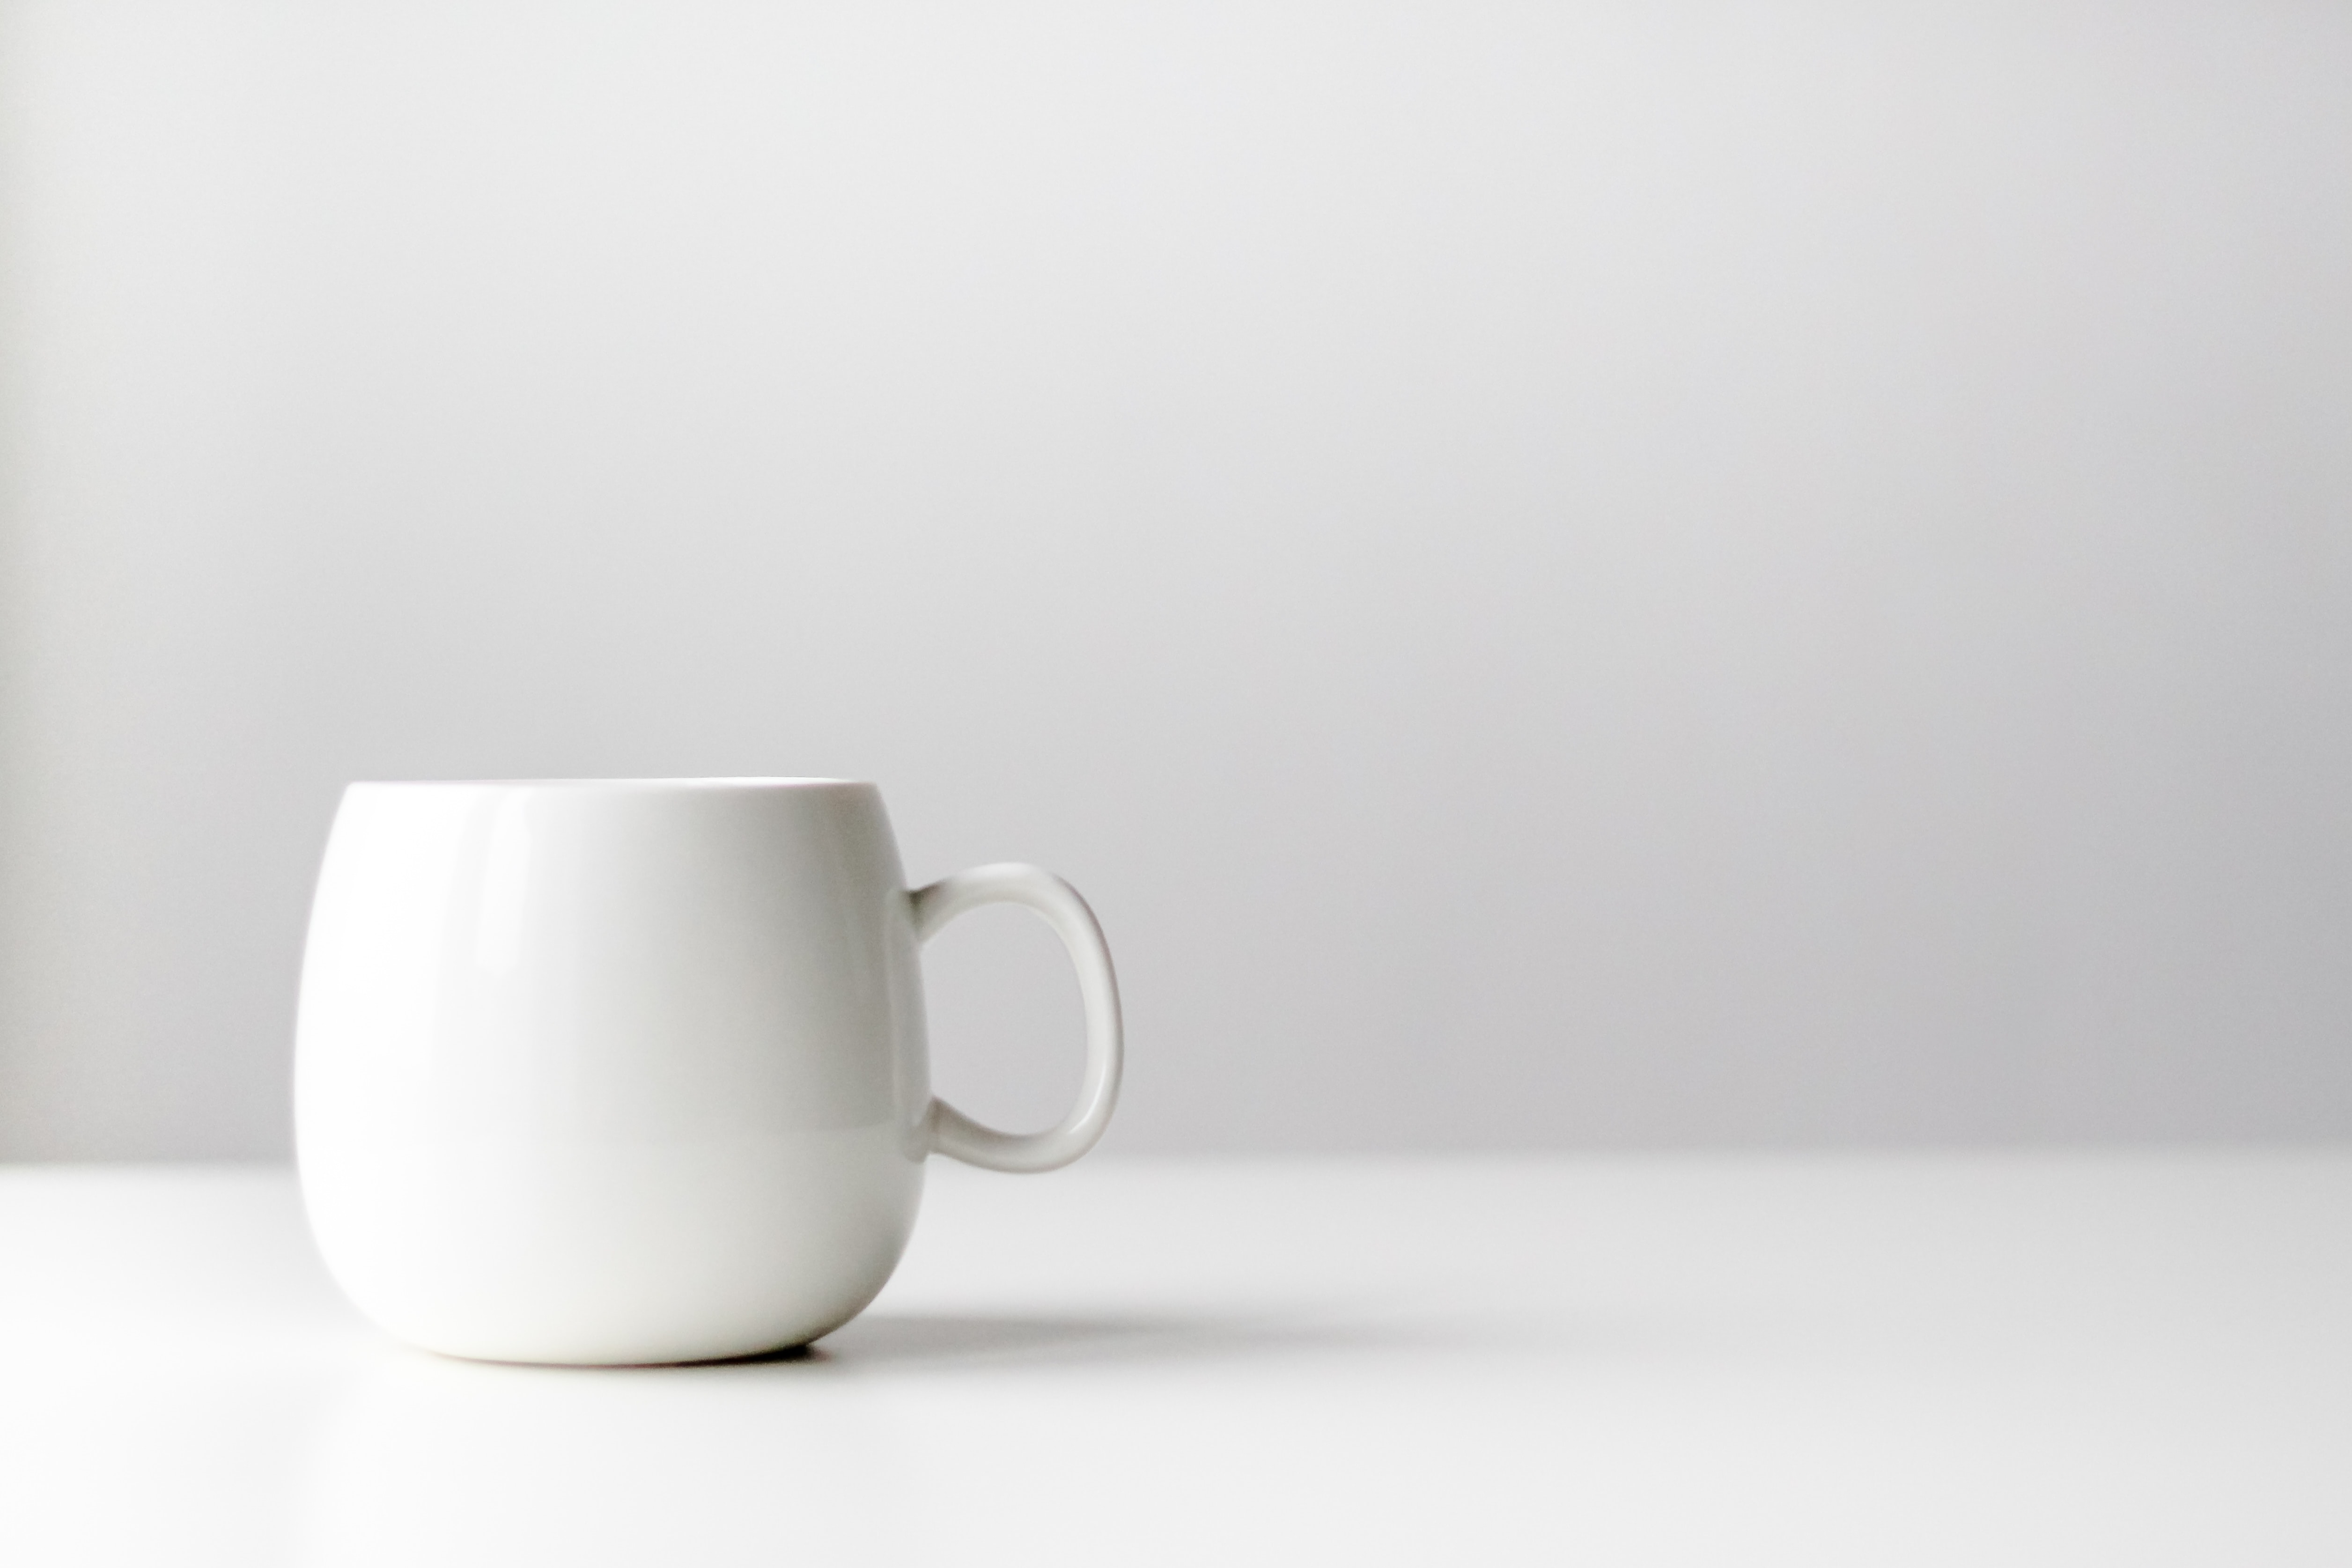 White mug against a white background